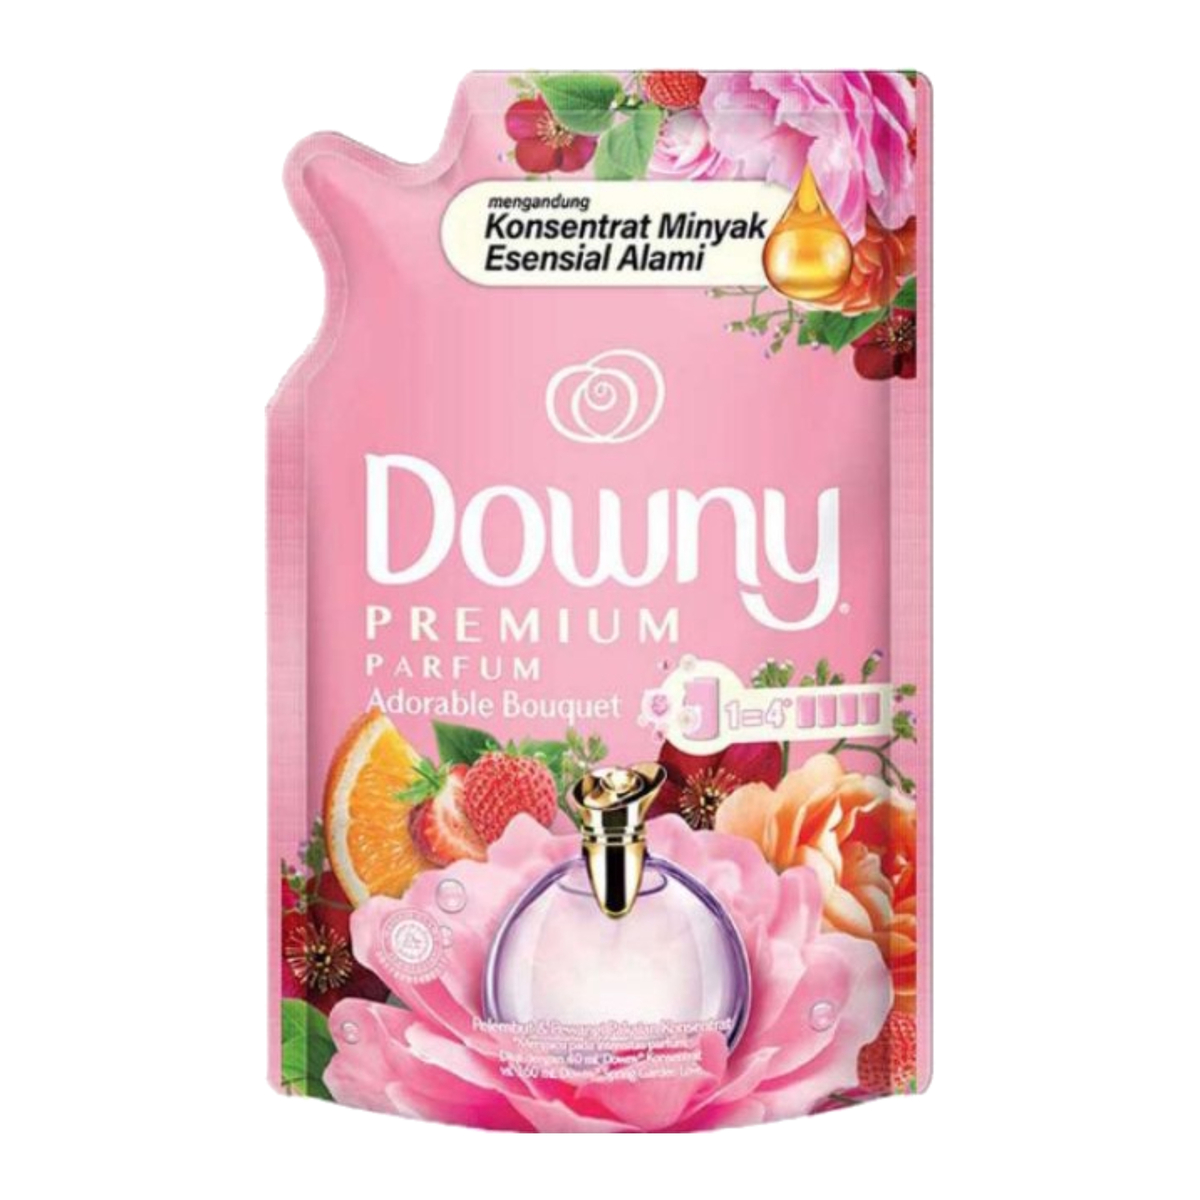 Downy Parfume Adorable Bouquet 900ml